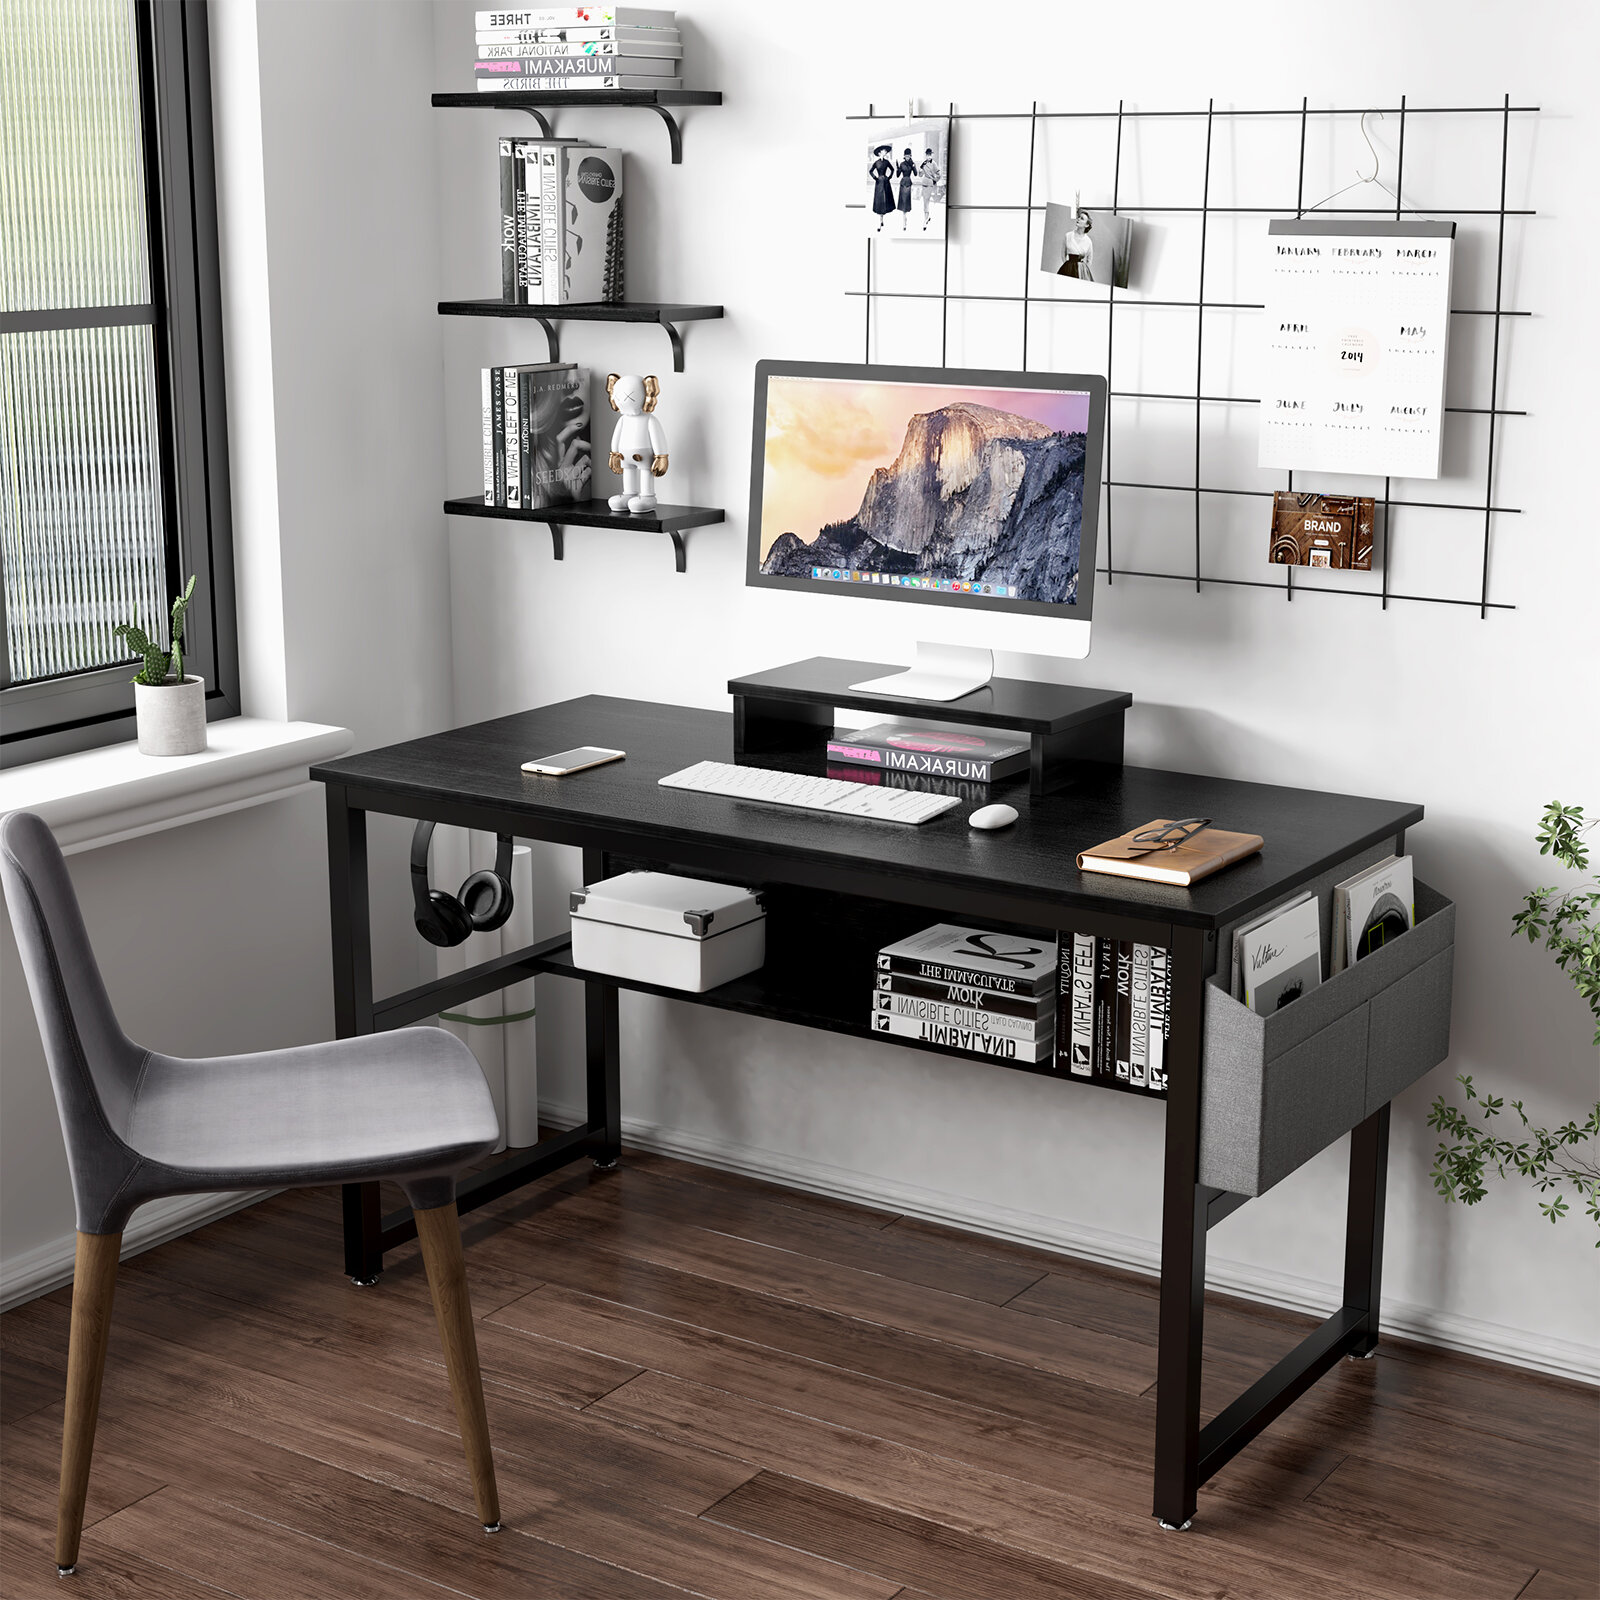 Home Office PC Laptop Table Workstation,Black Metal Frame & Desktop Study Writing Desk with Storage Bookshelf It's_Organized Ladder Desk,43 inch Computer Desk with Hutch